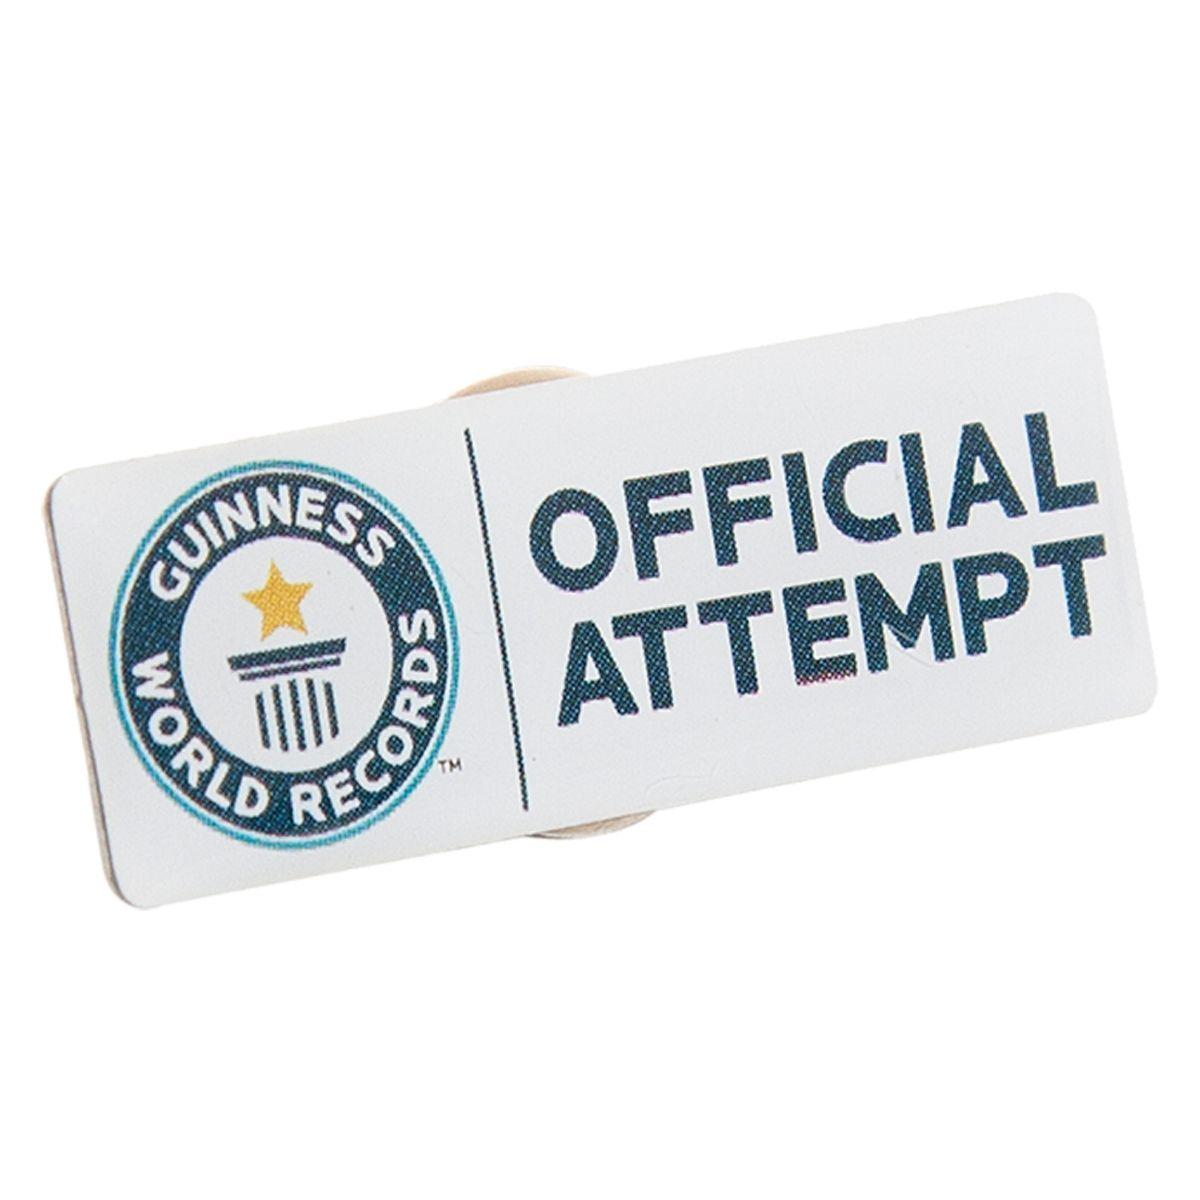 Guinness World Records Logo - The Guinness World Records Store